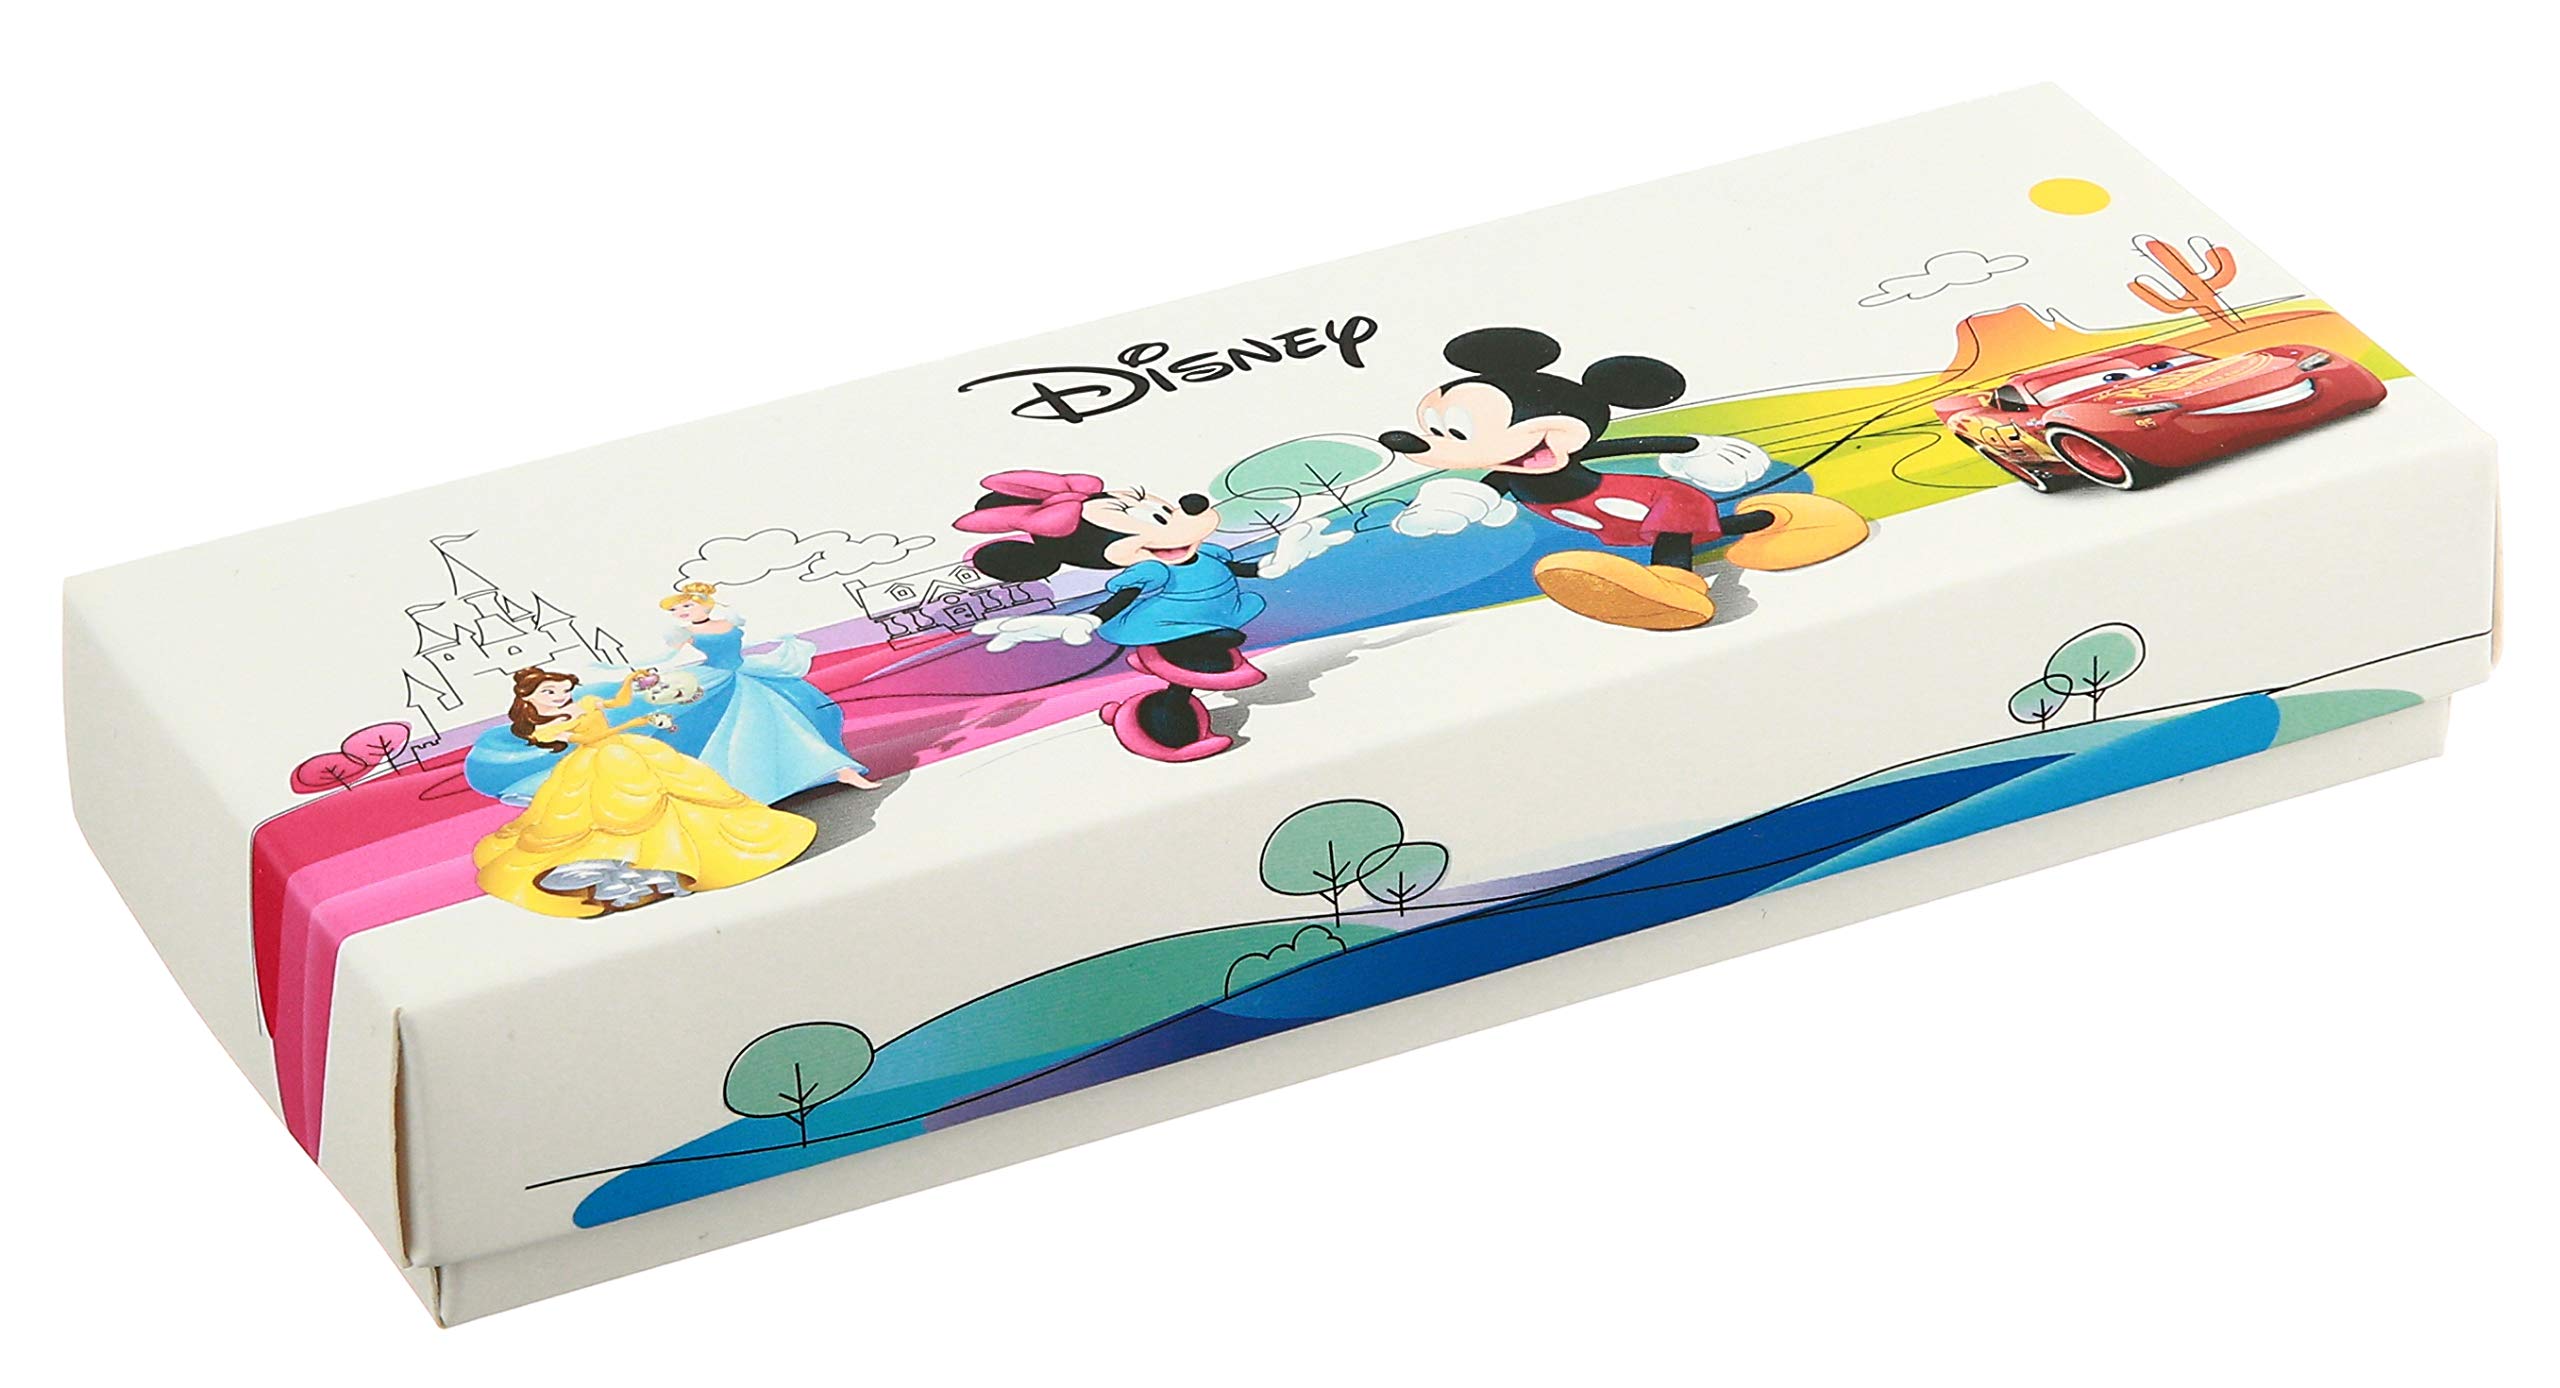 Disney Princess Kids' Plastic Time Teacher Analog Quartz Silicone Strap Watch